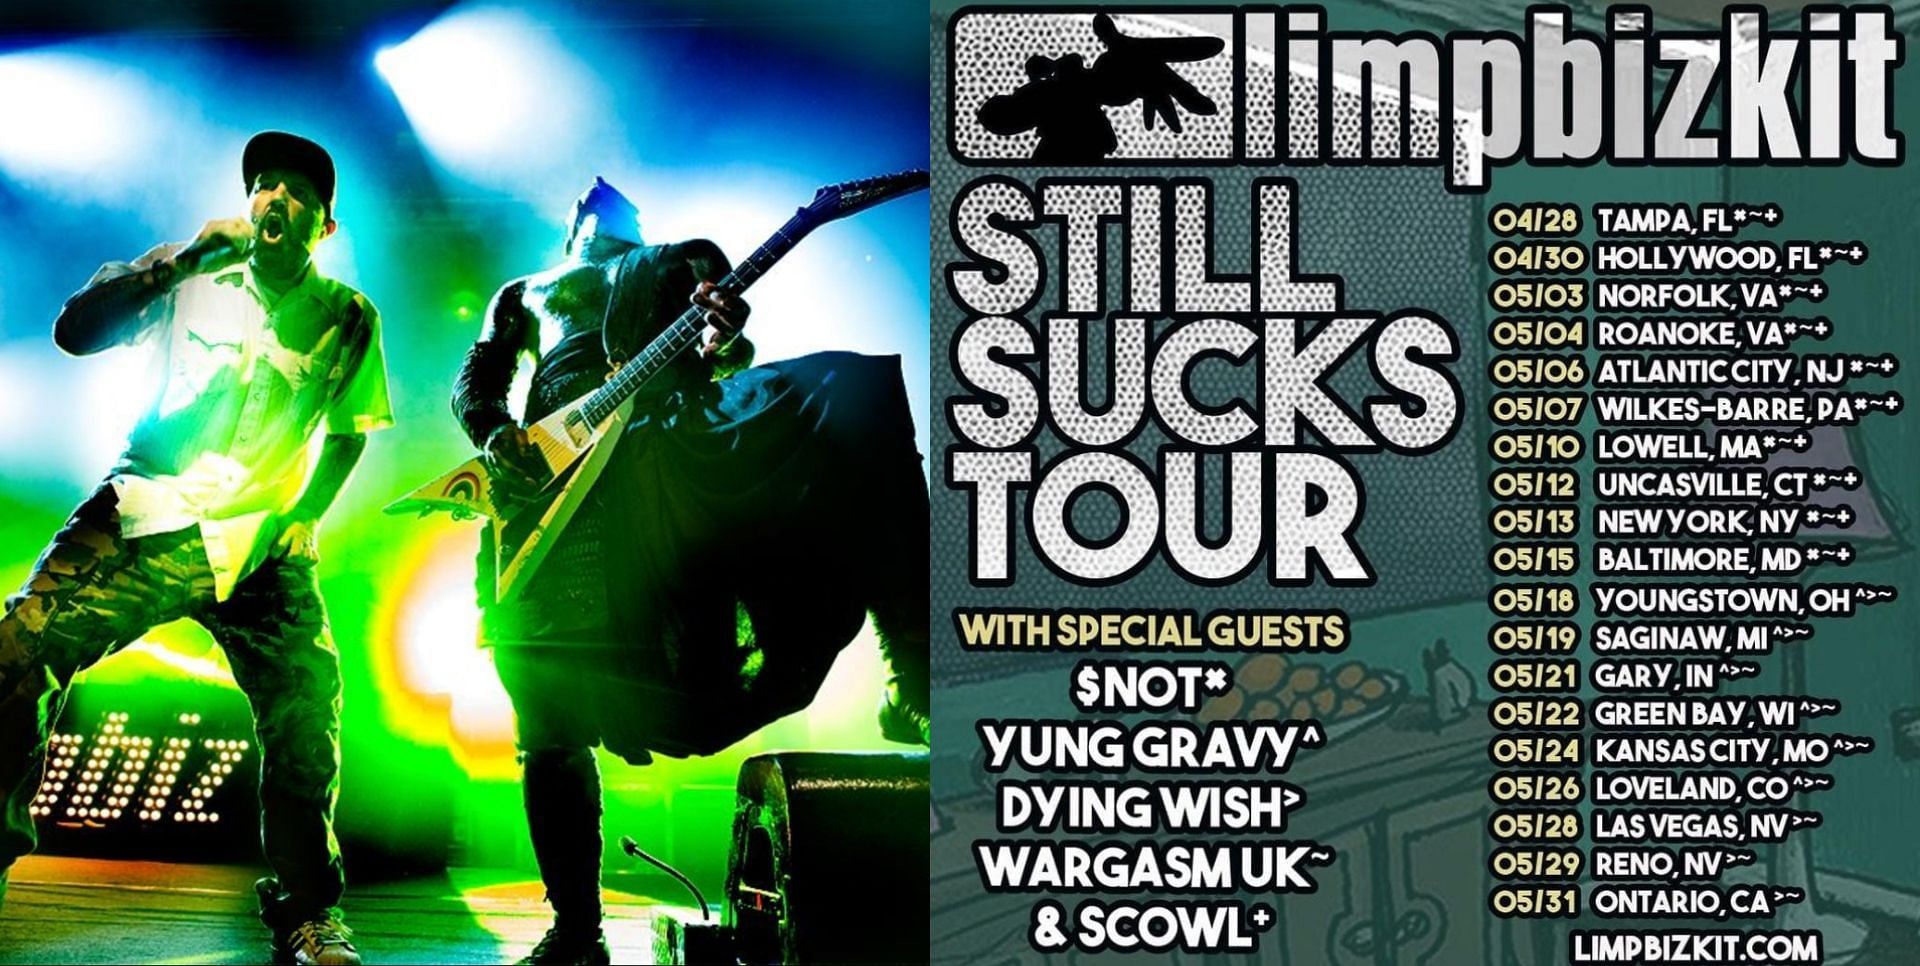 American nu-metal band Limp Bizkit has announced their upcoming US Spring tour in support of their recent album, Still Sucks. (Images via Limp Bizkit/Facebook)